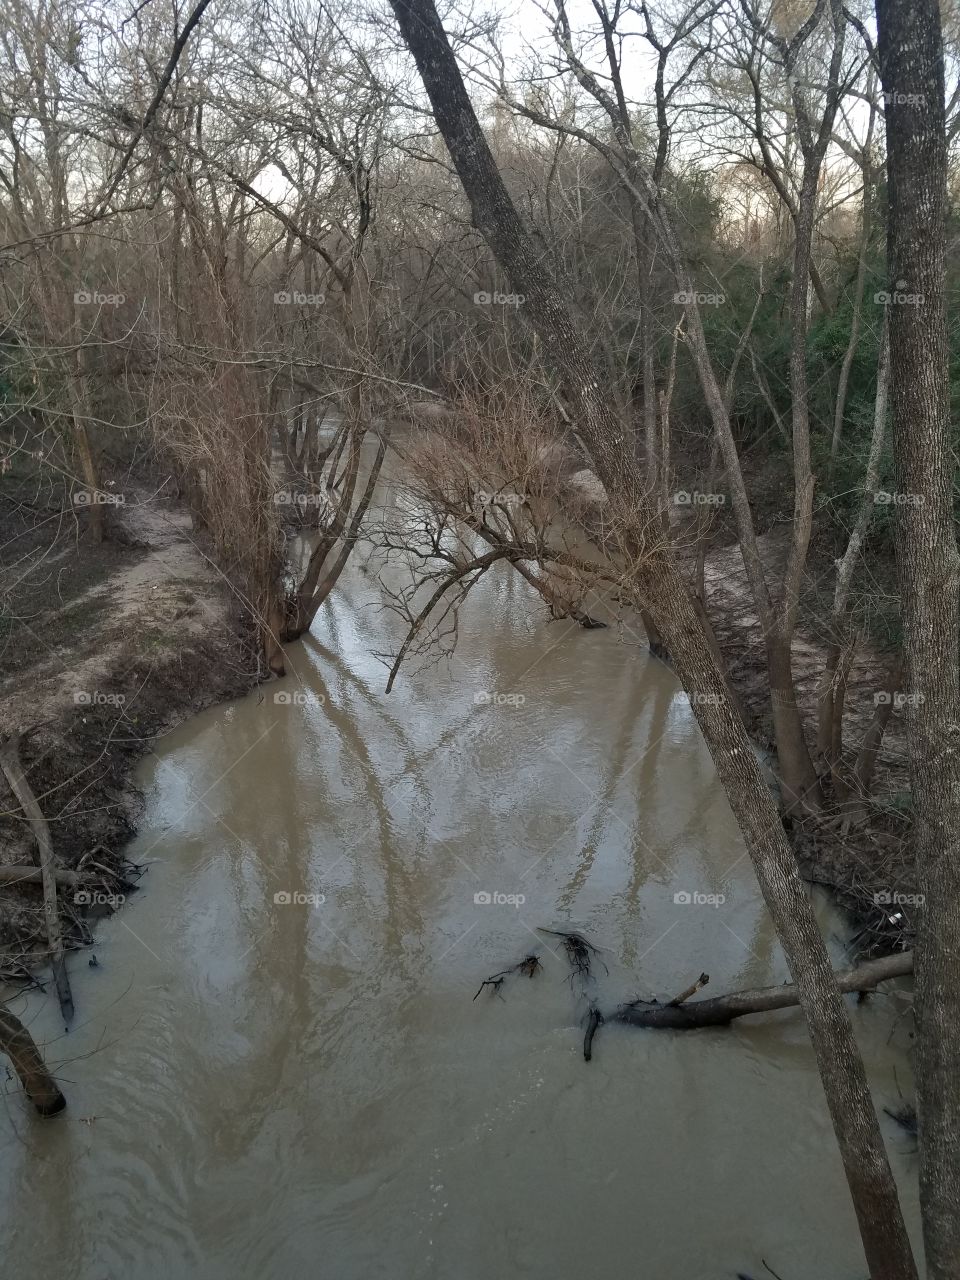 Walking over the creek...